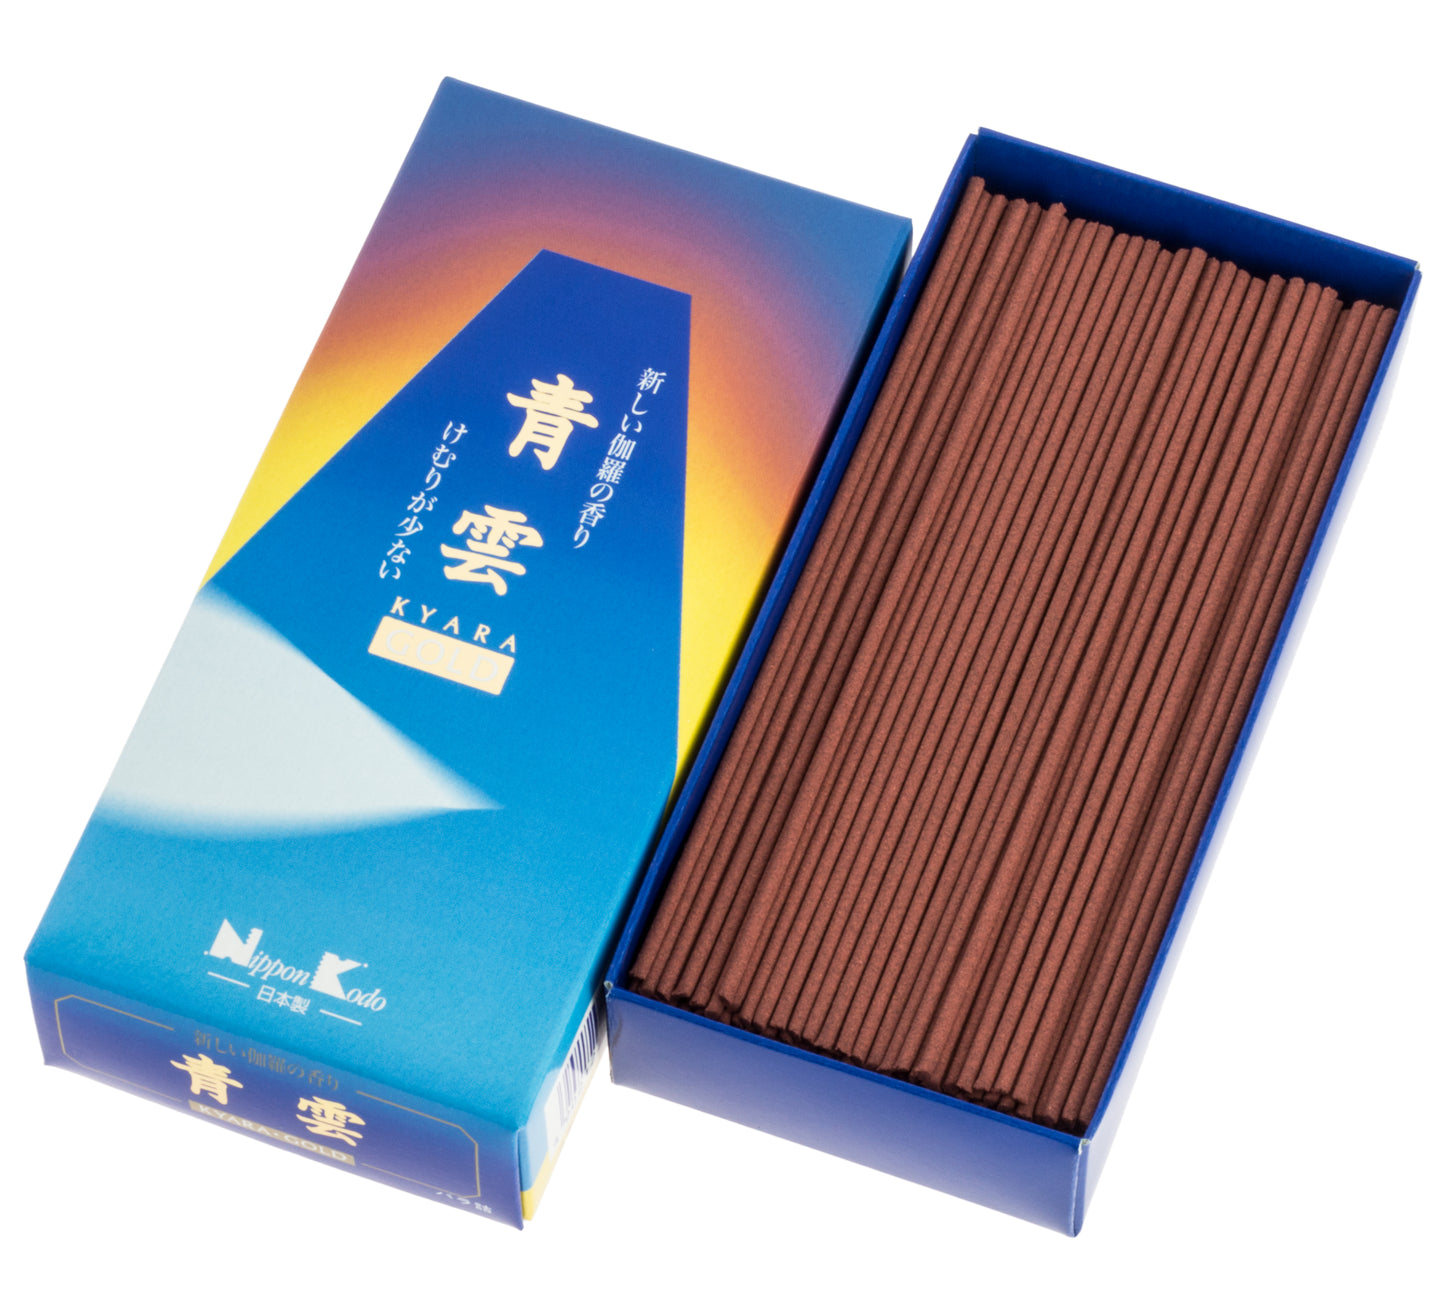 Seiun Gold Incense - Large Box